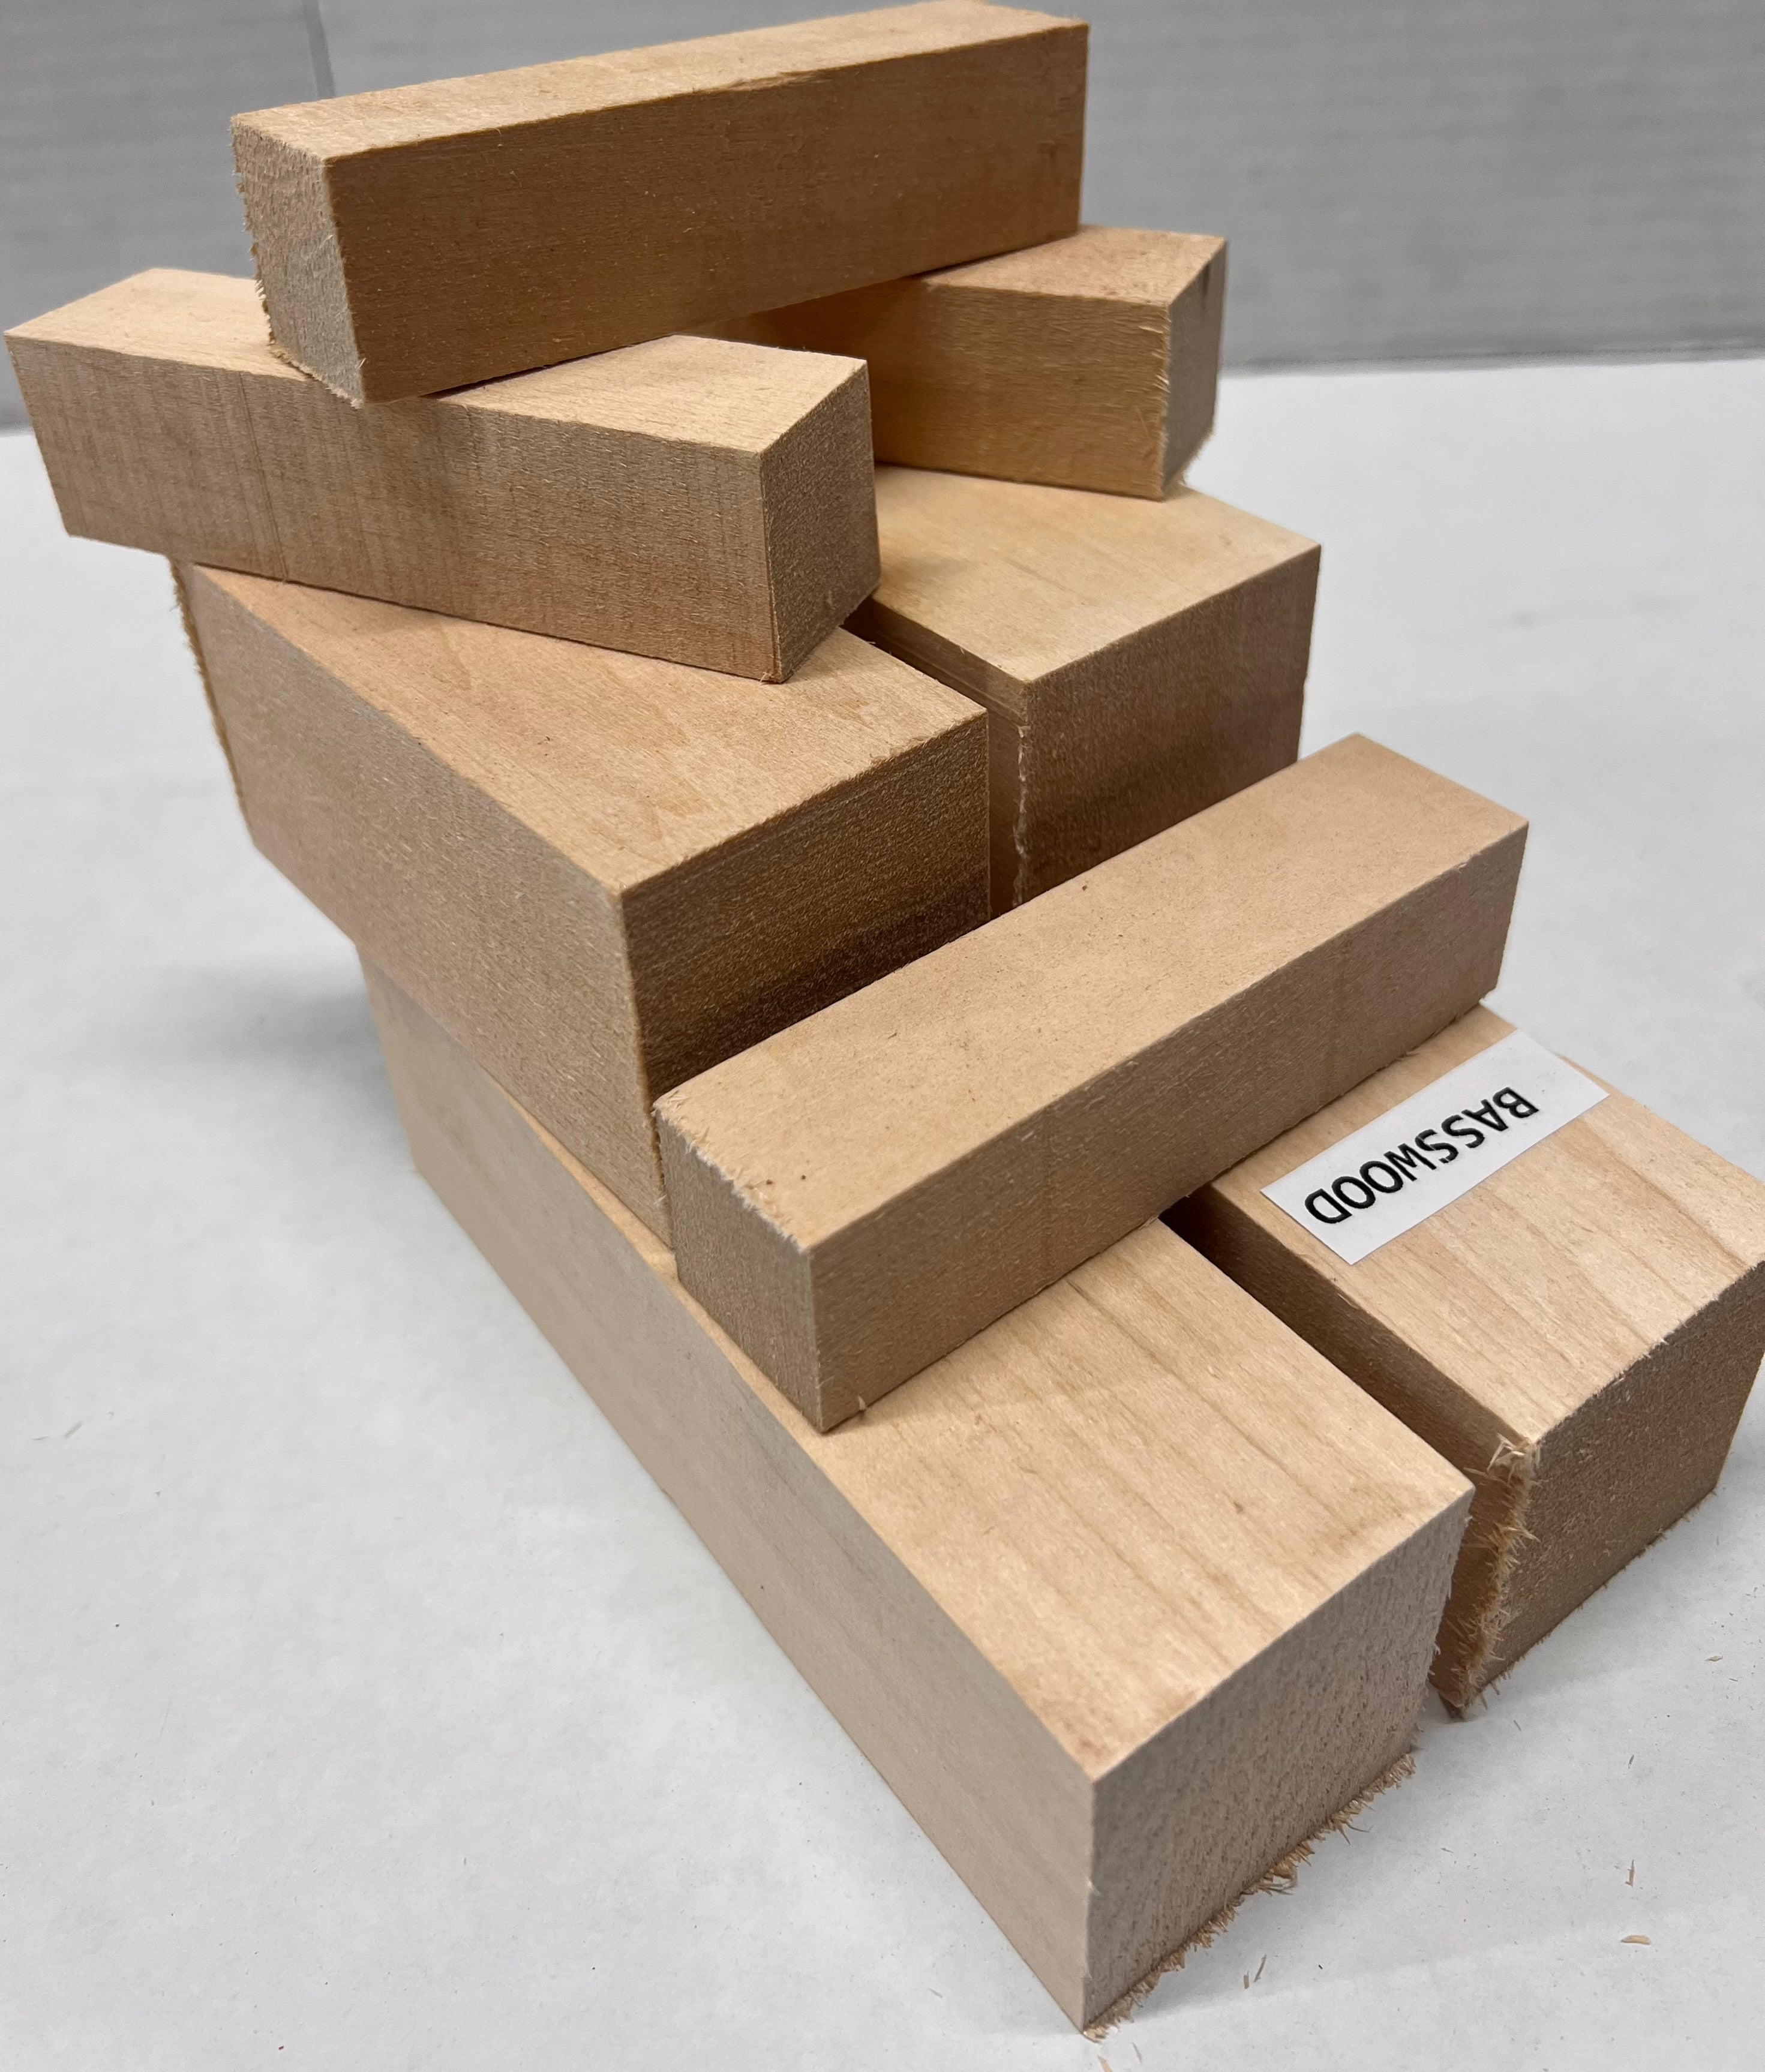 Set of 8, Smooth Carving/Whittling Wood Blocks- Set of Basswood Kit 